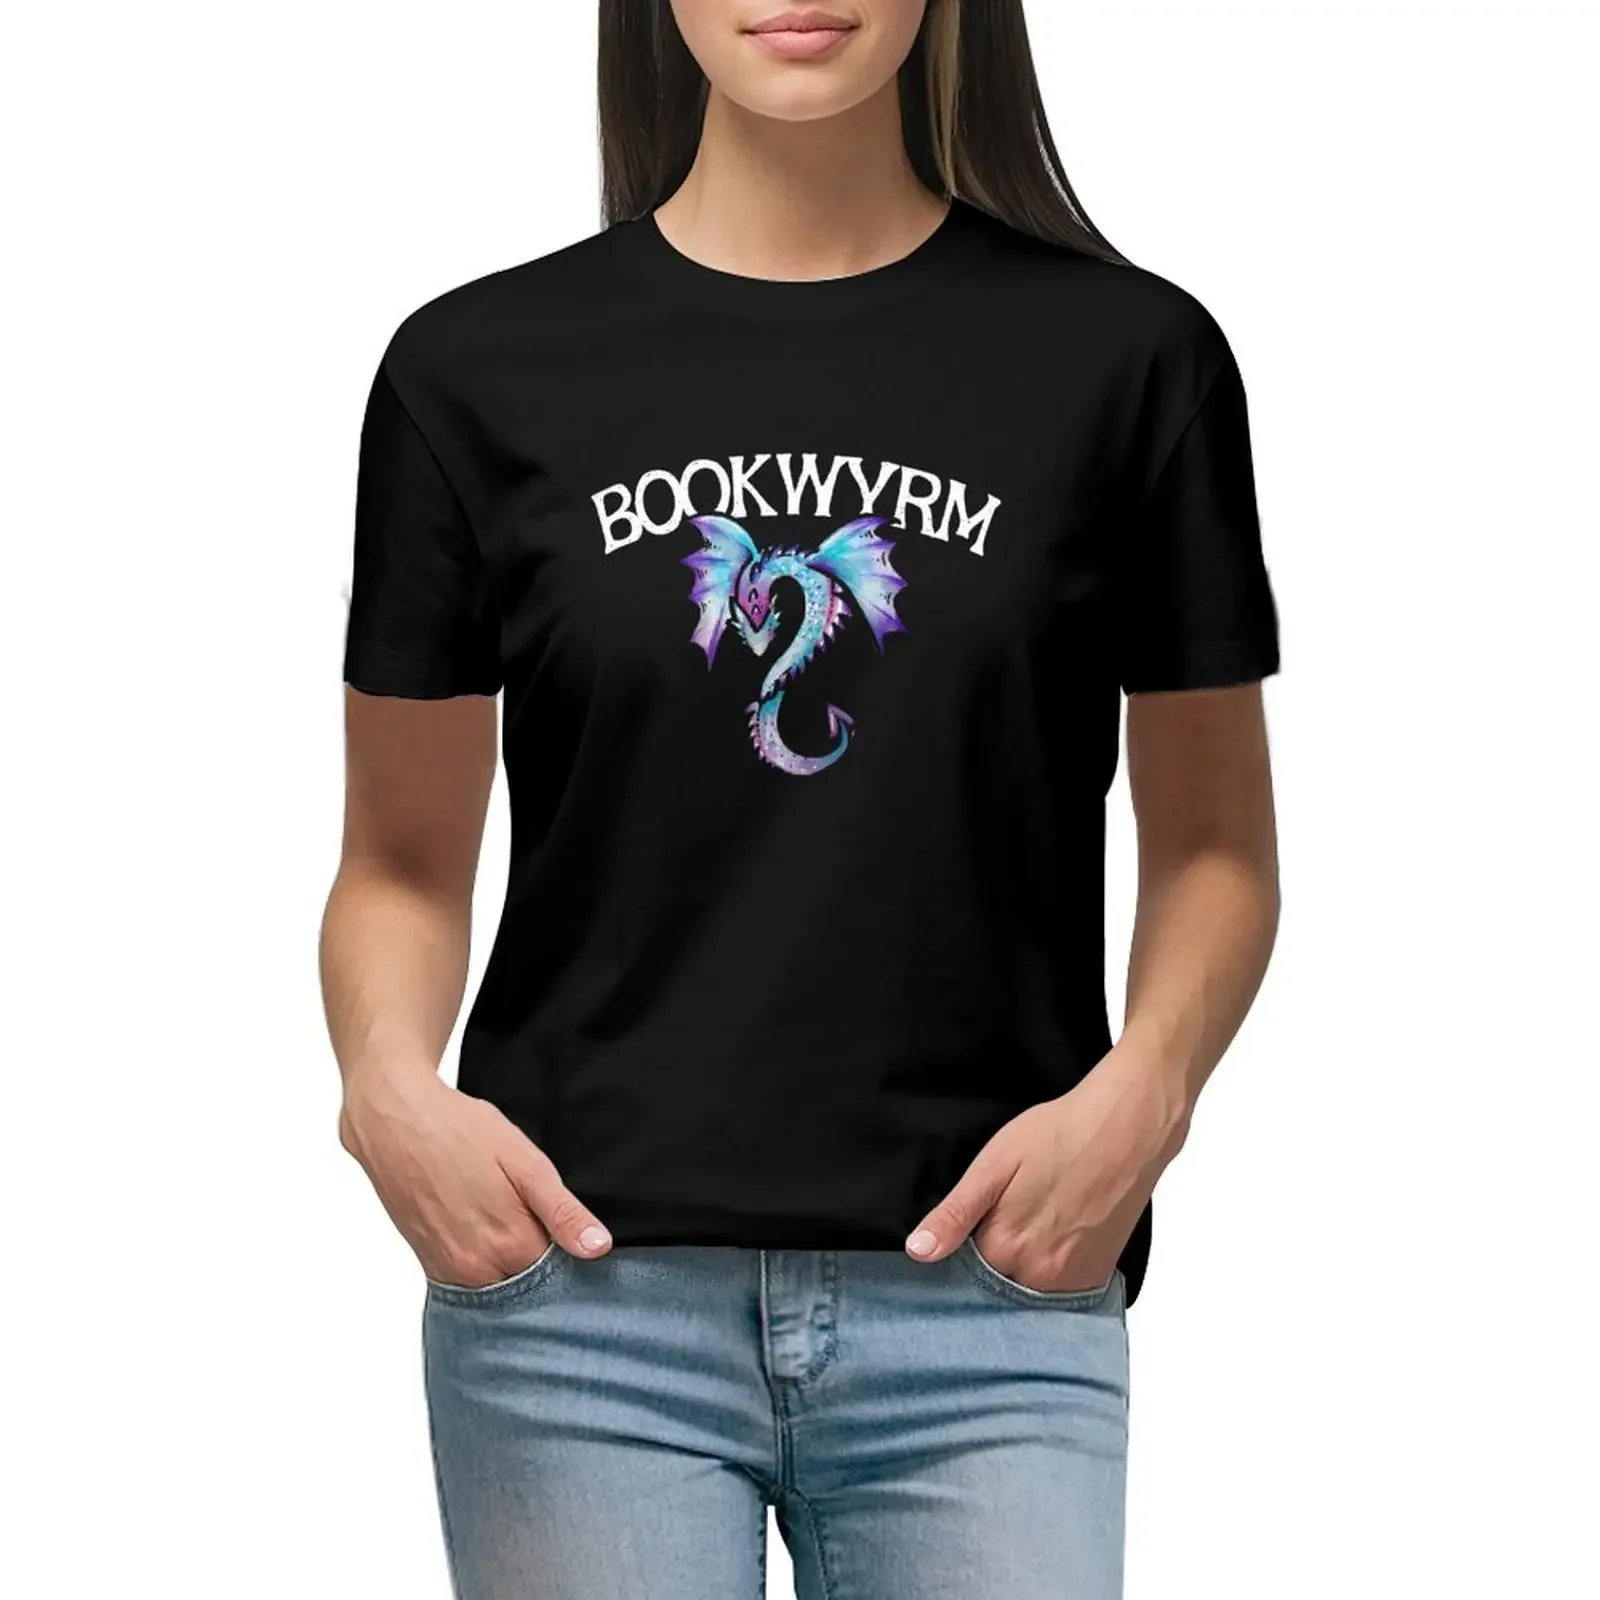 

Bookwyrm T-shirt summer tops Female clothing Women clothing